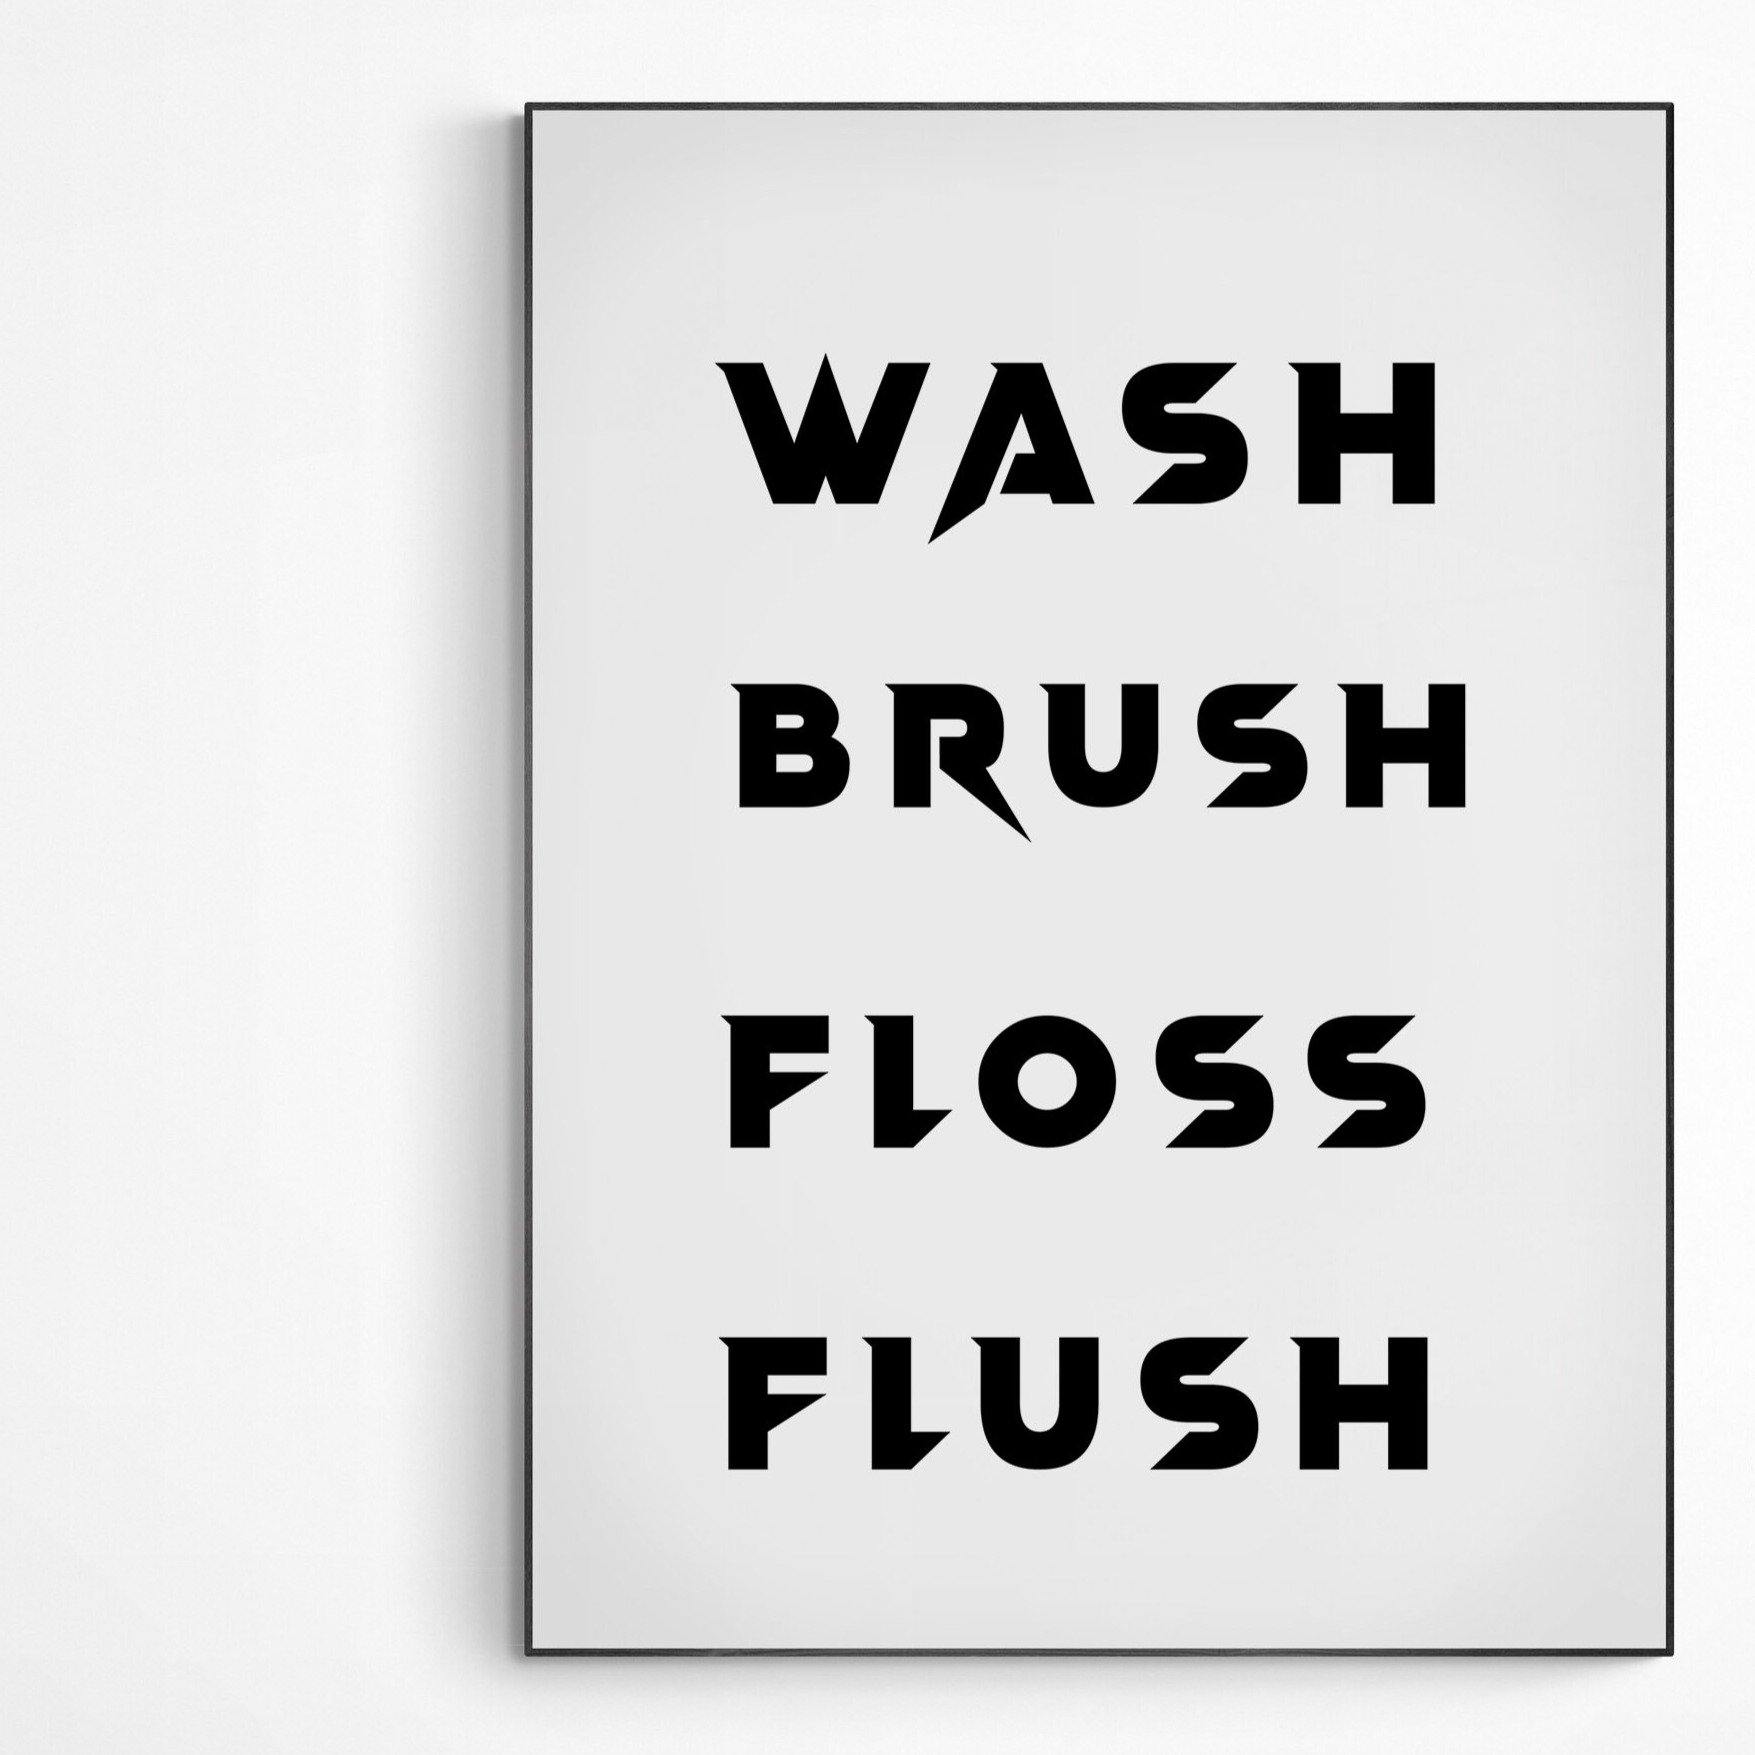 Wash Brush Floss Flush Poster, Bathroom Prints Wall Art, Bathroom Decor, Funny Toilet Humour Print, Bathroom Wall Art, Bathroom Sign